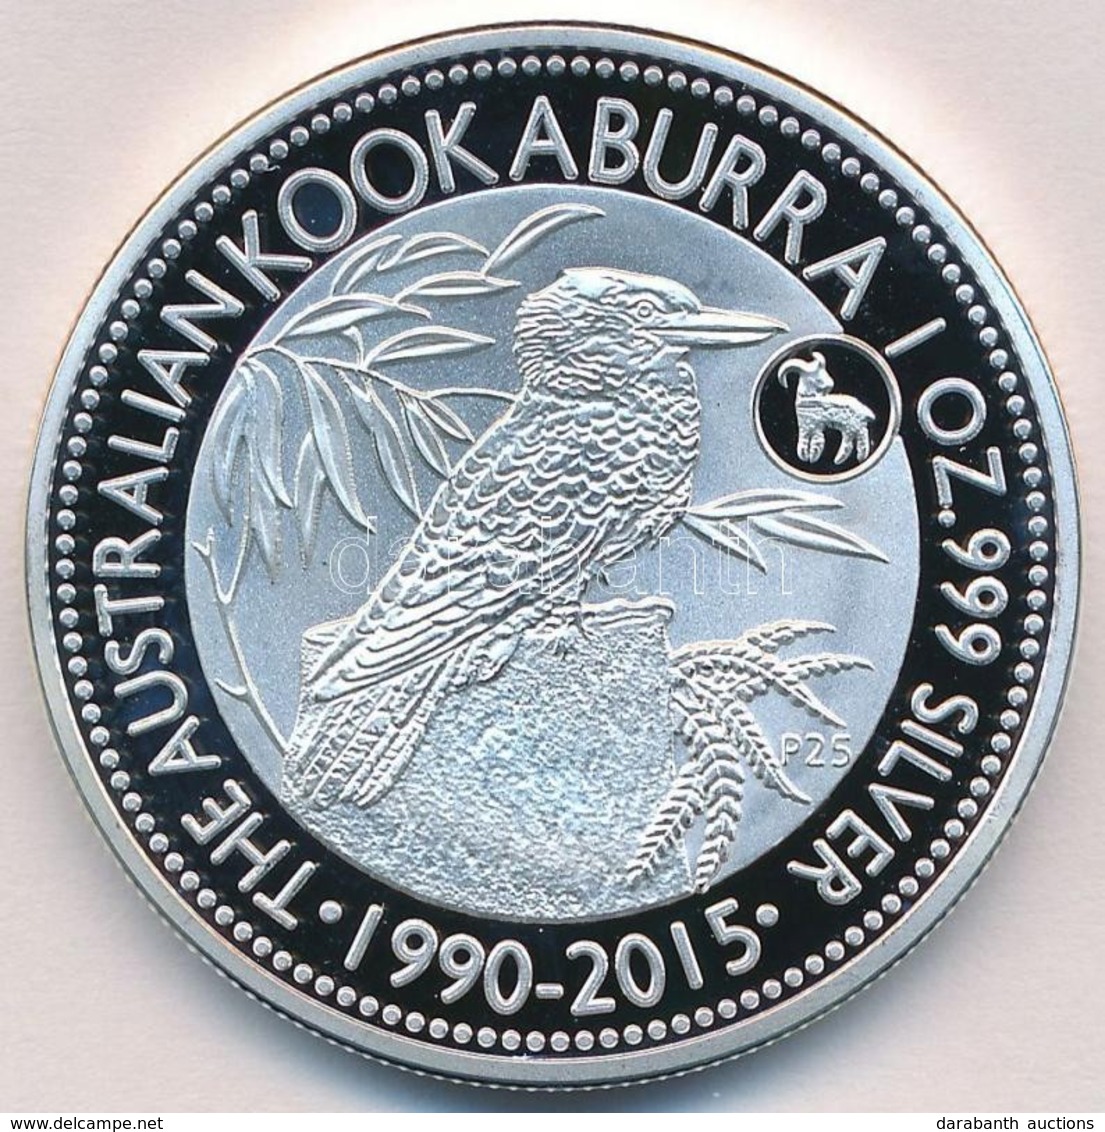 Ausztrália 2015. 1$ Ag 'Kookaburra' (1oz/0.999) T:PP 
Australia 2015. 1 Dollar Ag 'Kookaburra' (1oz/0.999) C:PP - Unclassified